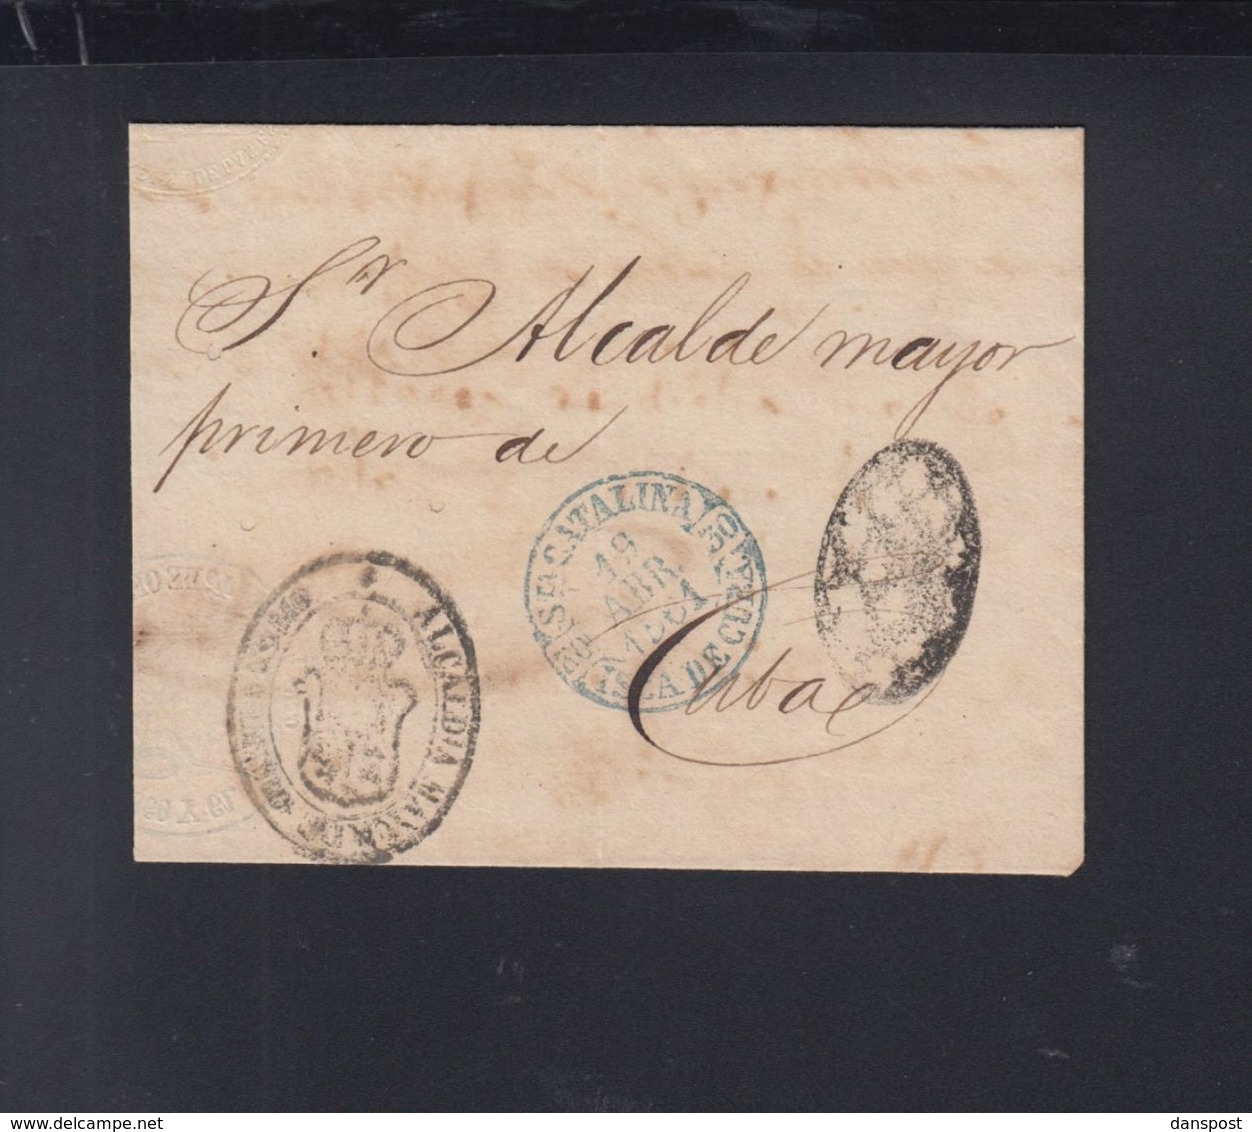 Cuba Letter 1861 - Prephilately